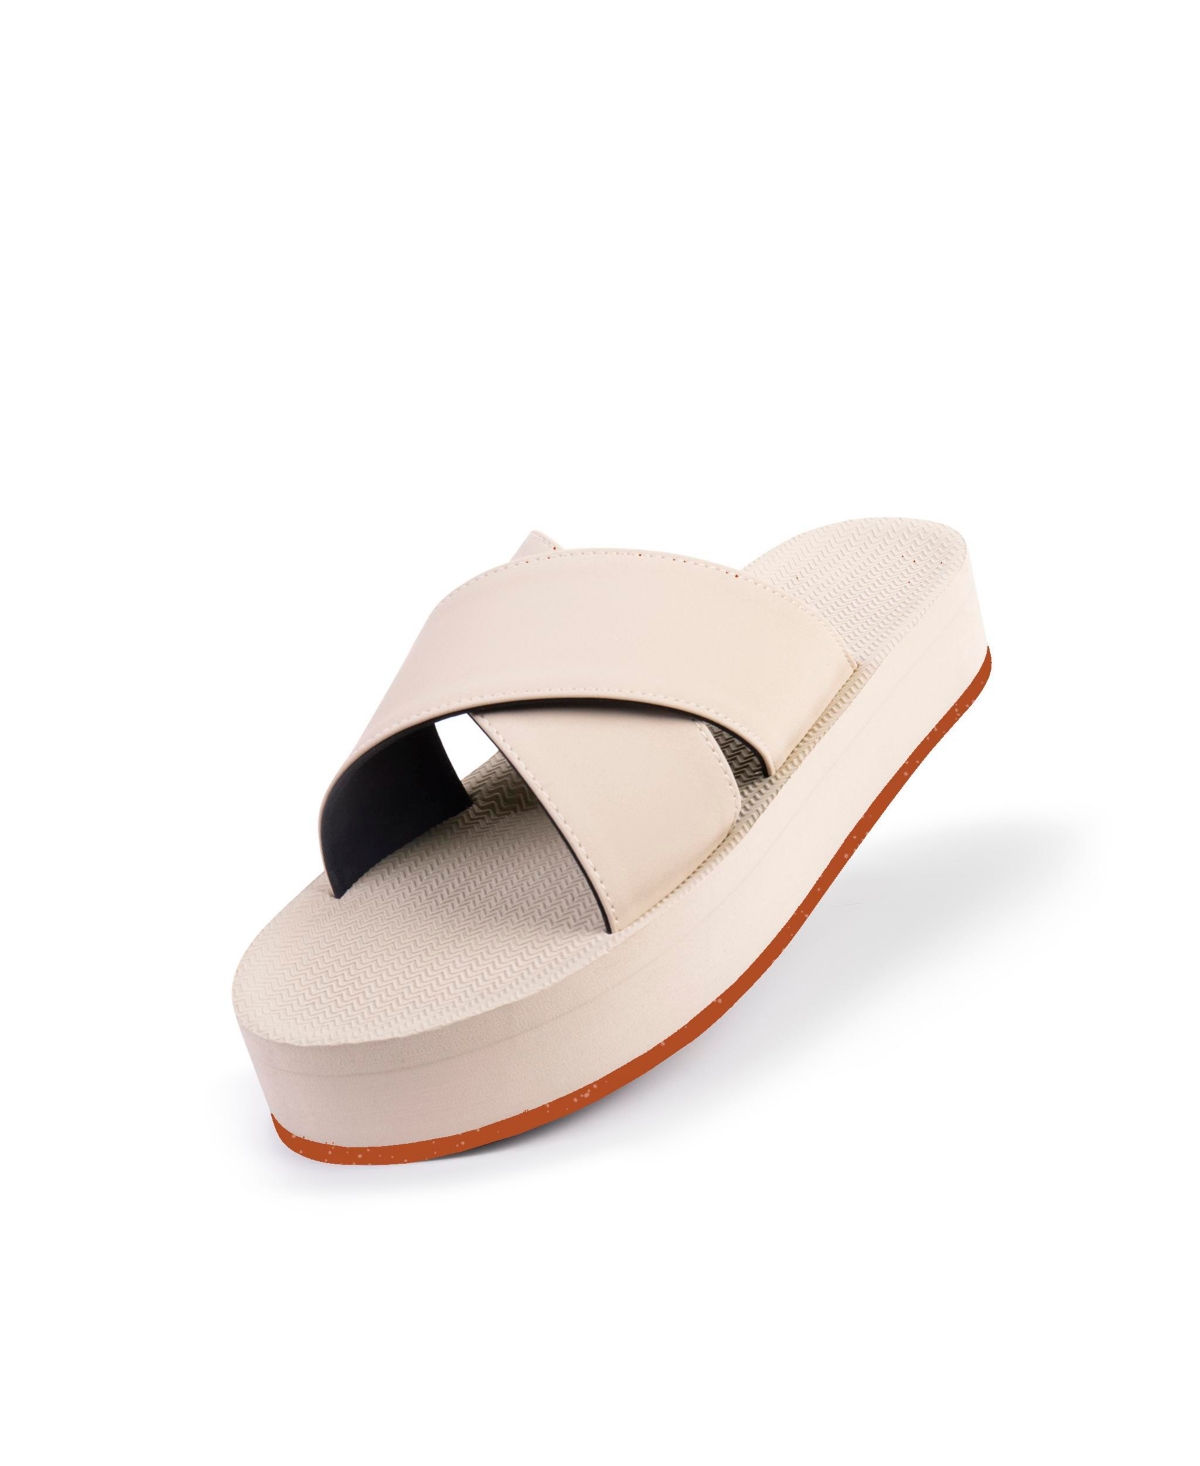 Women's Cross Platform Sandal with Sneaker Sole - Indigo sole/shore